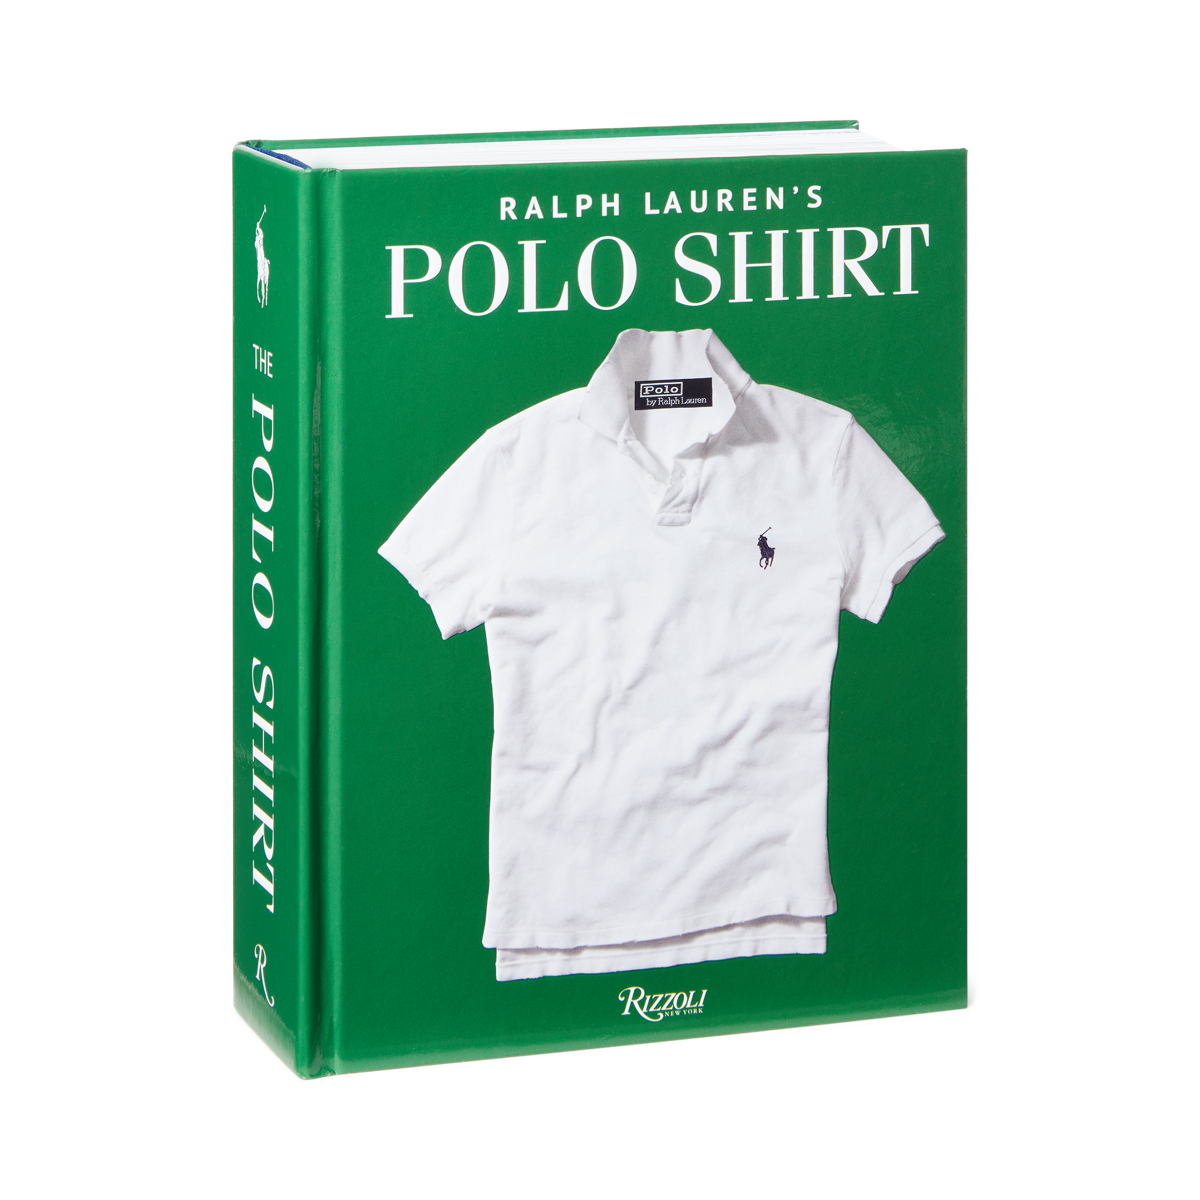 Commotie tussen String string Ralph Lauren's Polo Shirt Book